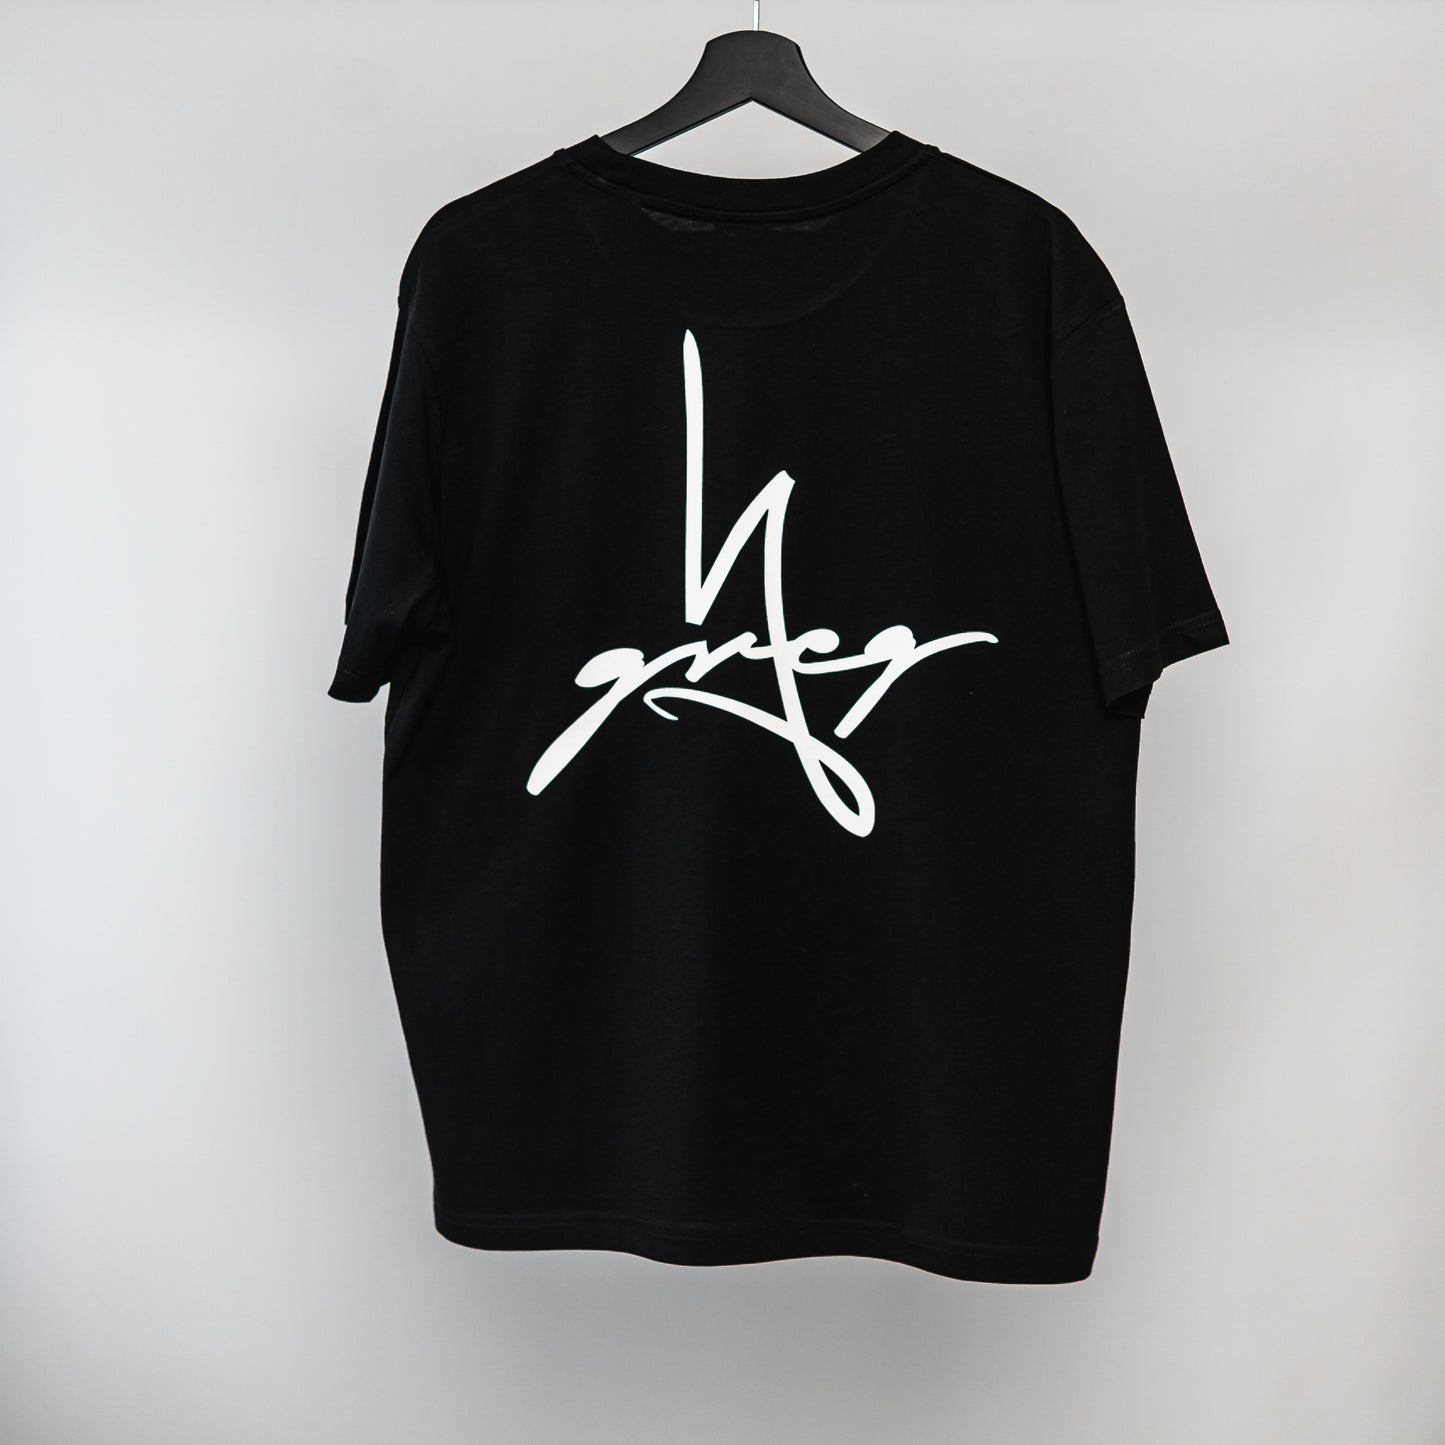 T-shirt YGREG 'Authentic' Black